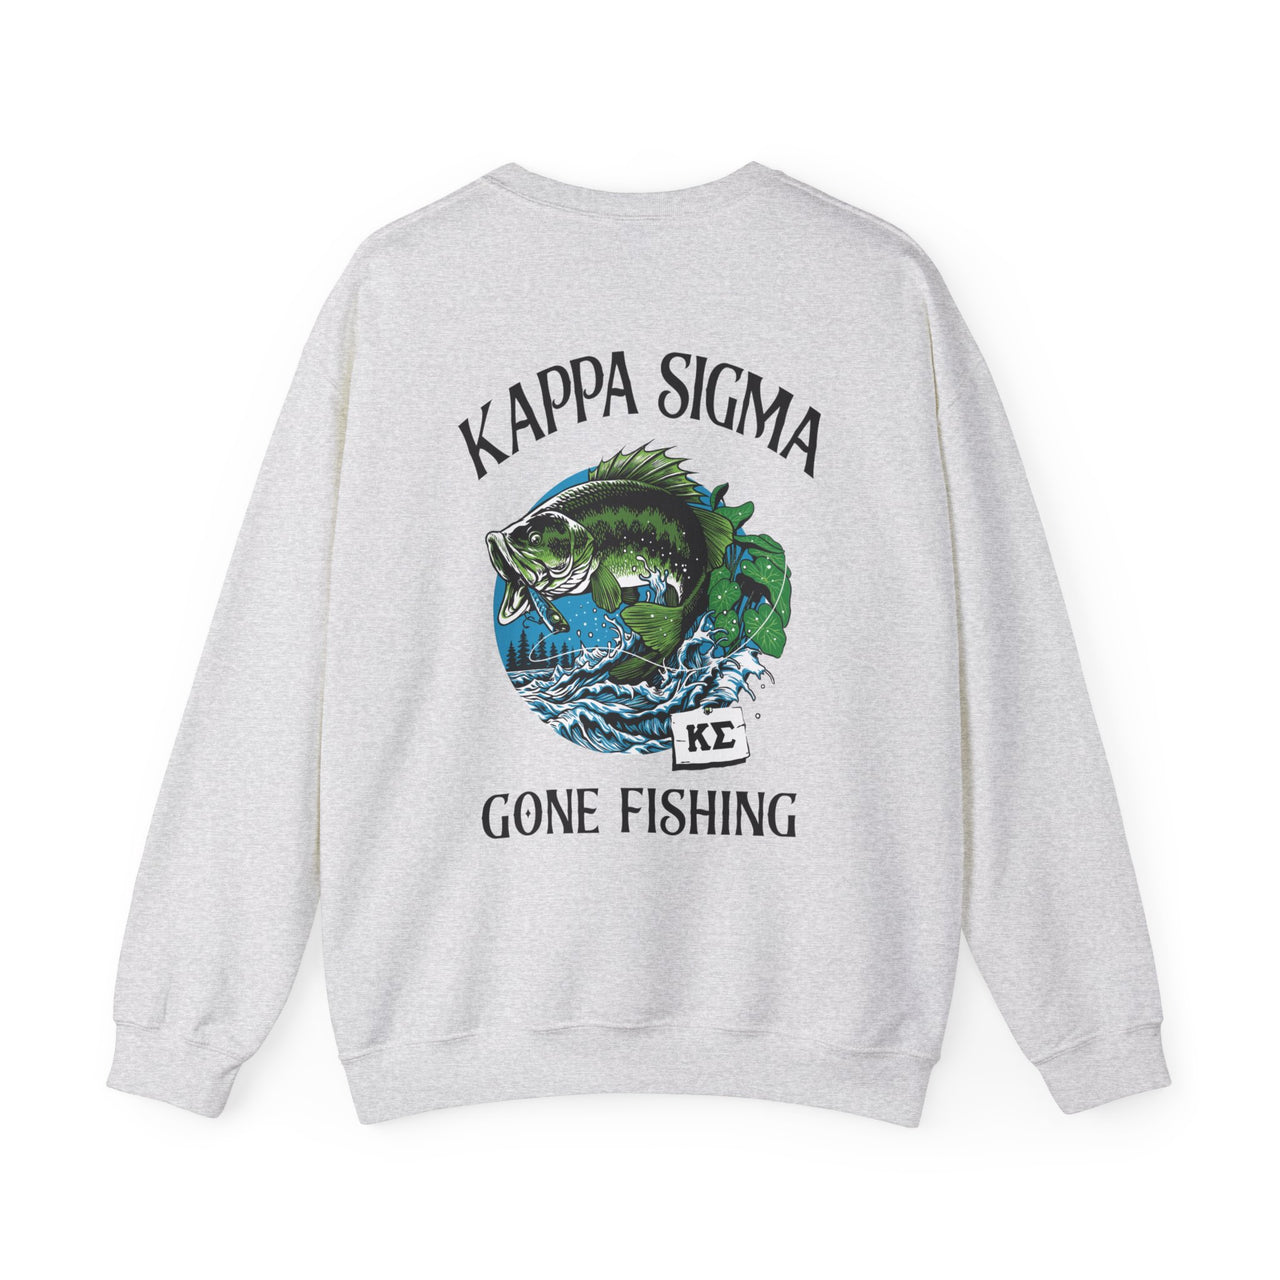 Kappa Sigma Graphic Crewneck Sweatshirt | Gone Fishing